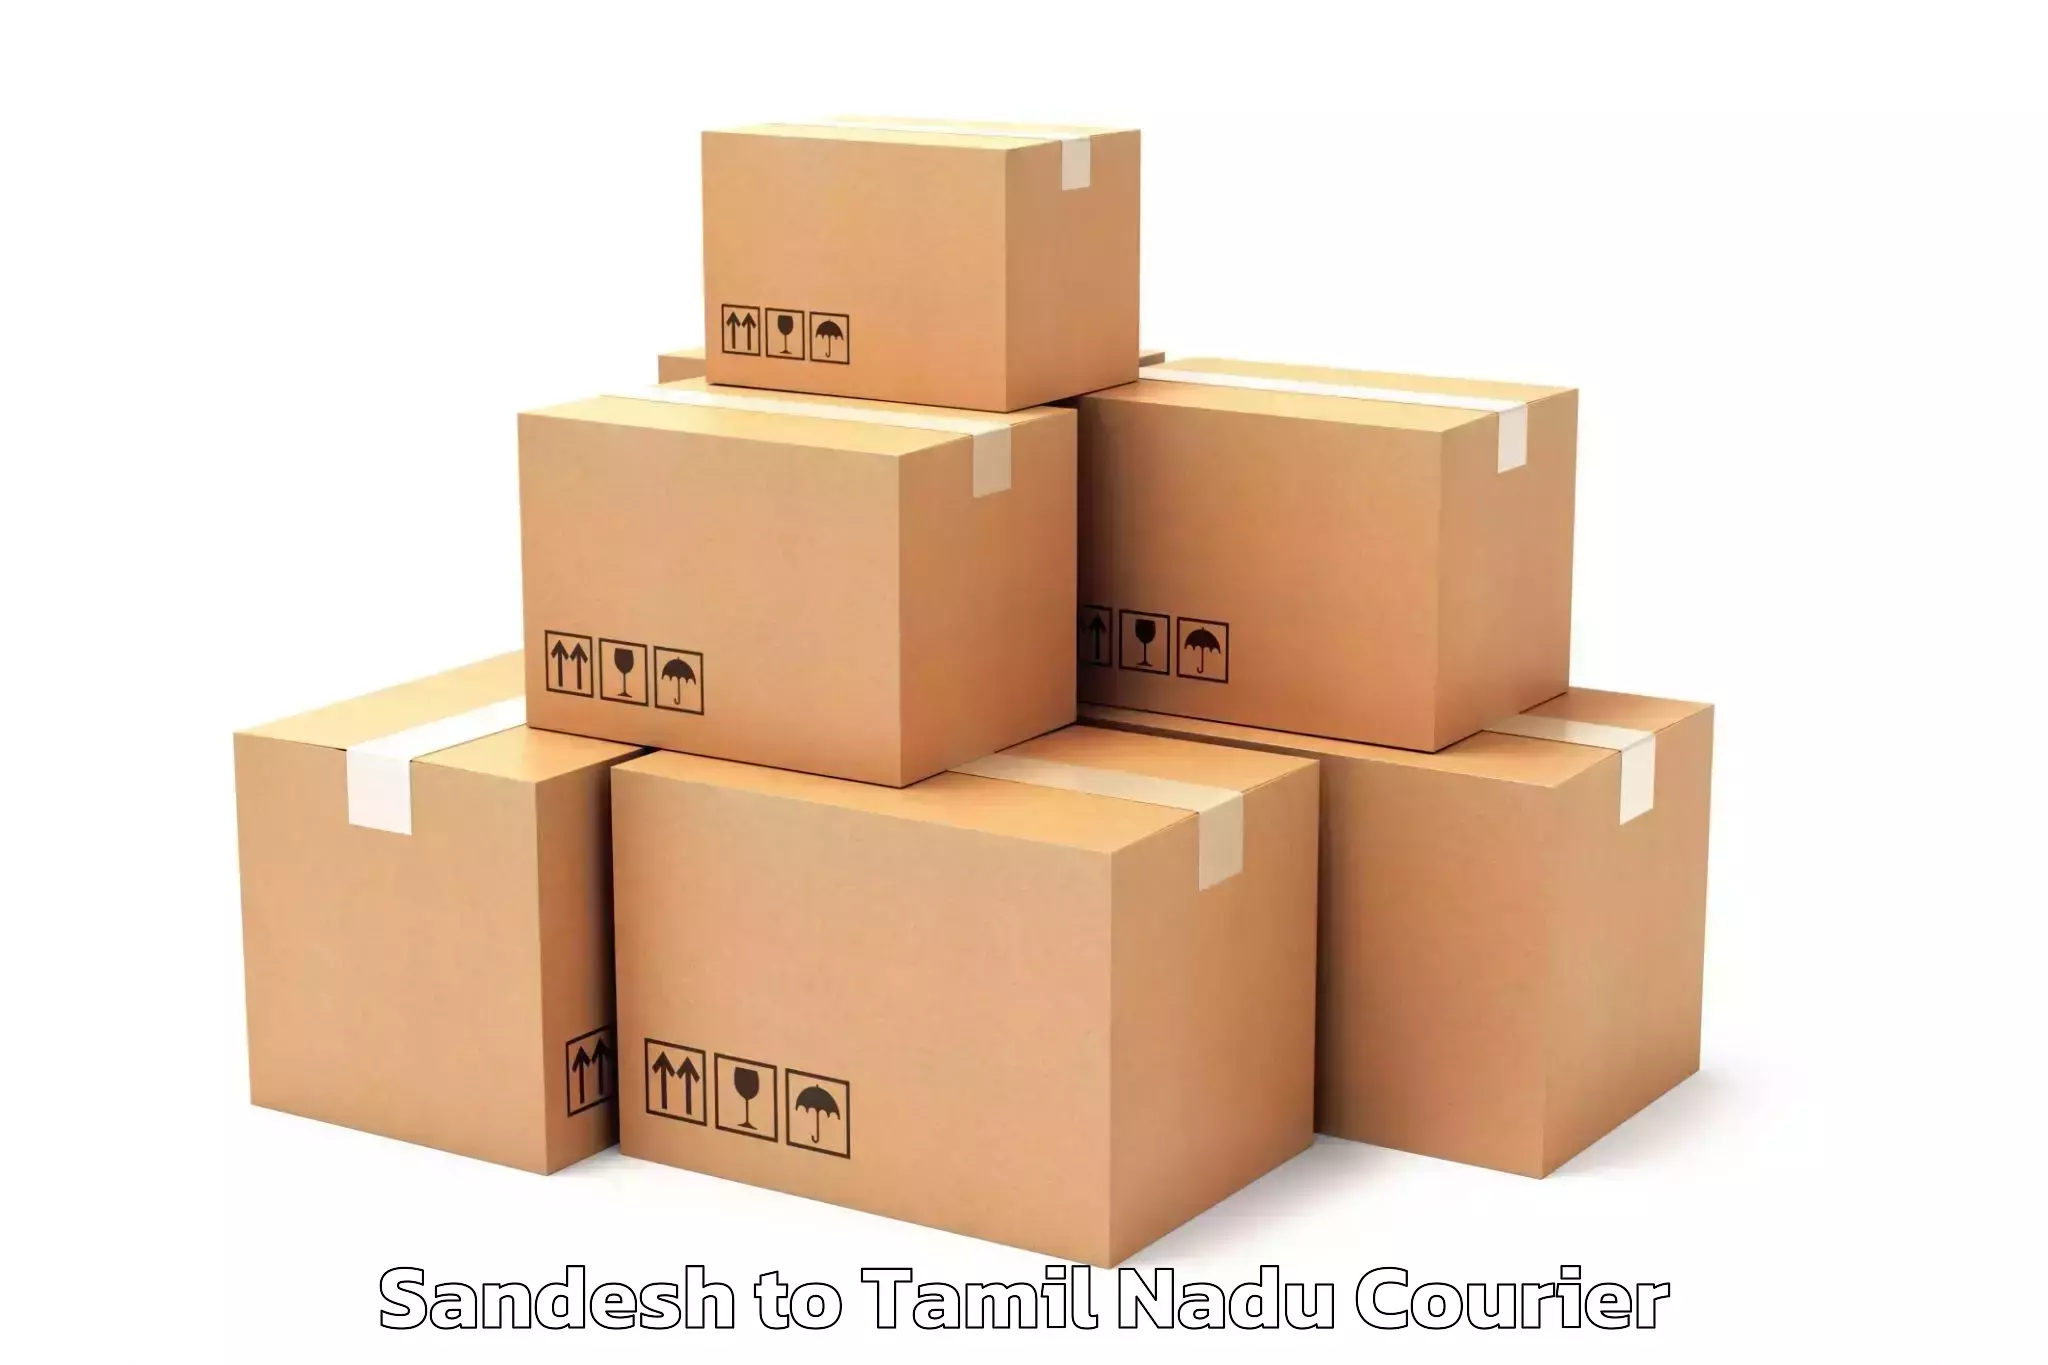 Efficient moving company Sandesh to Tamil Nadu